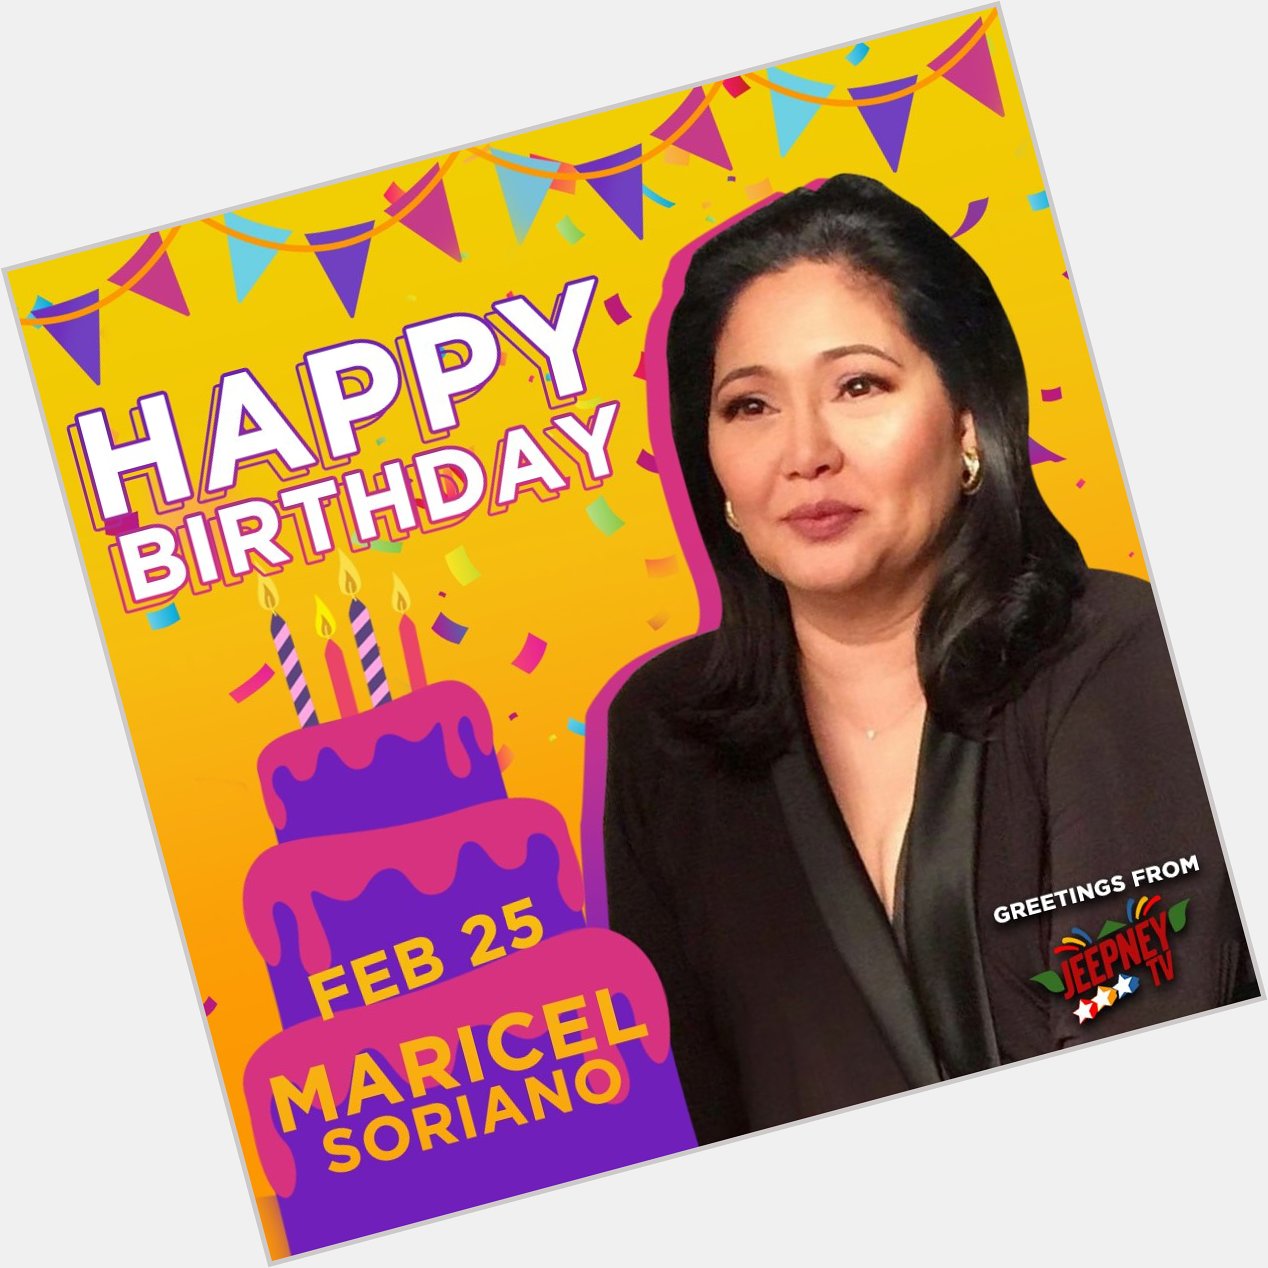 Happy birthday Maricel Soriano!  Greetings from Jeepney TV 